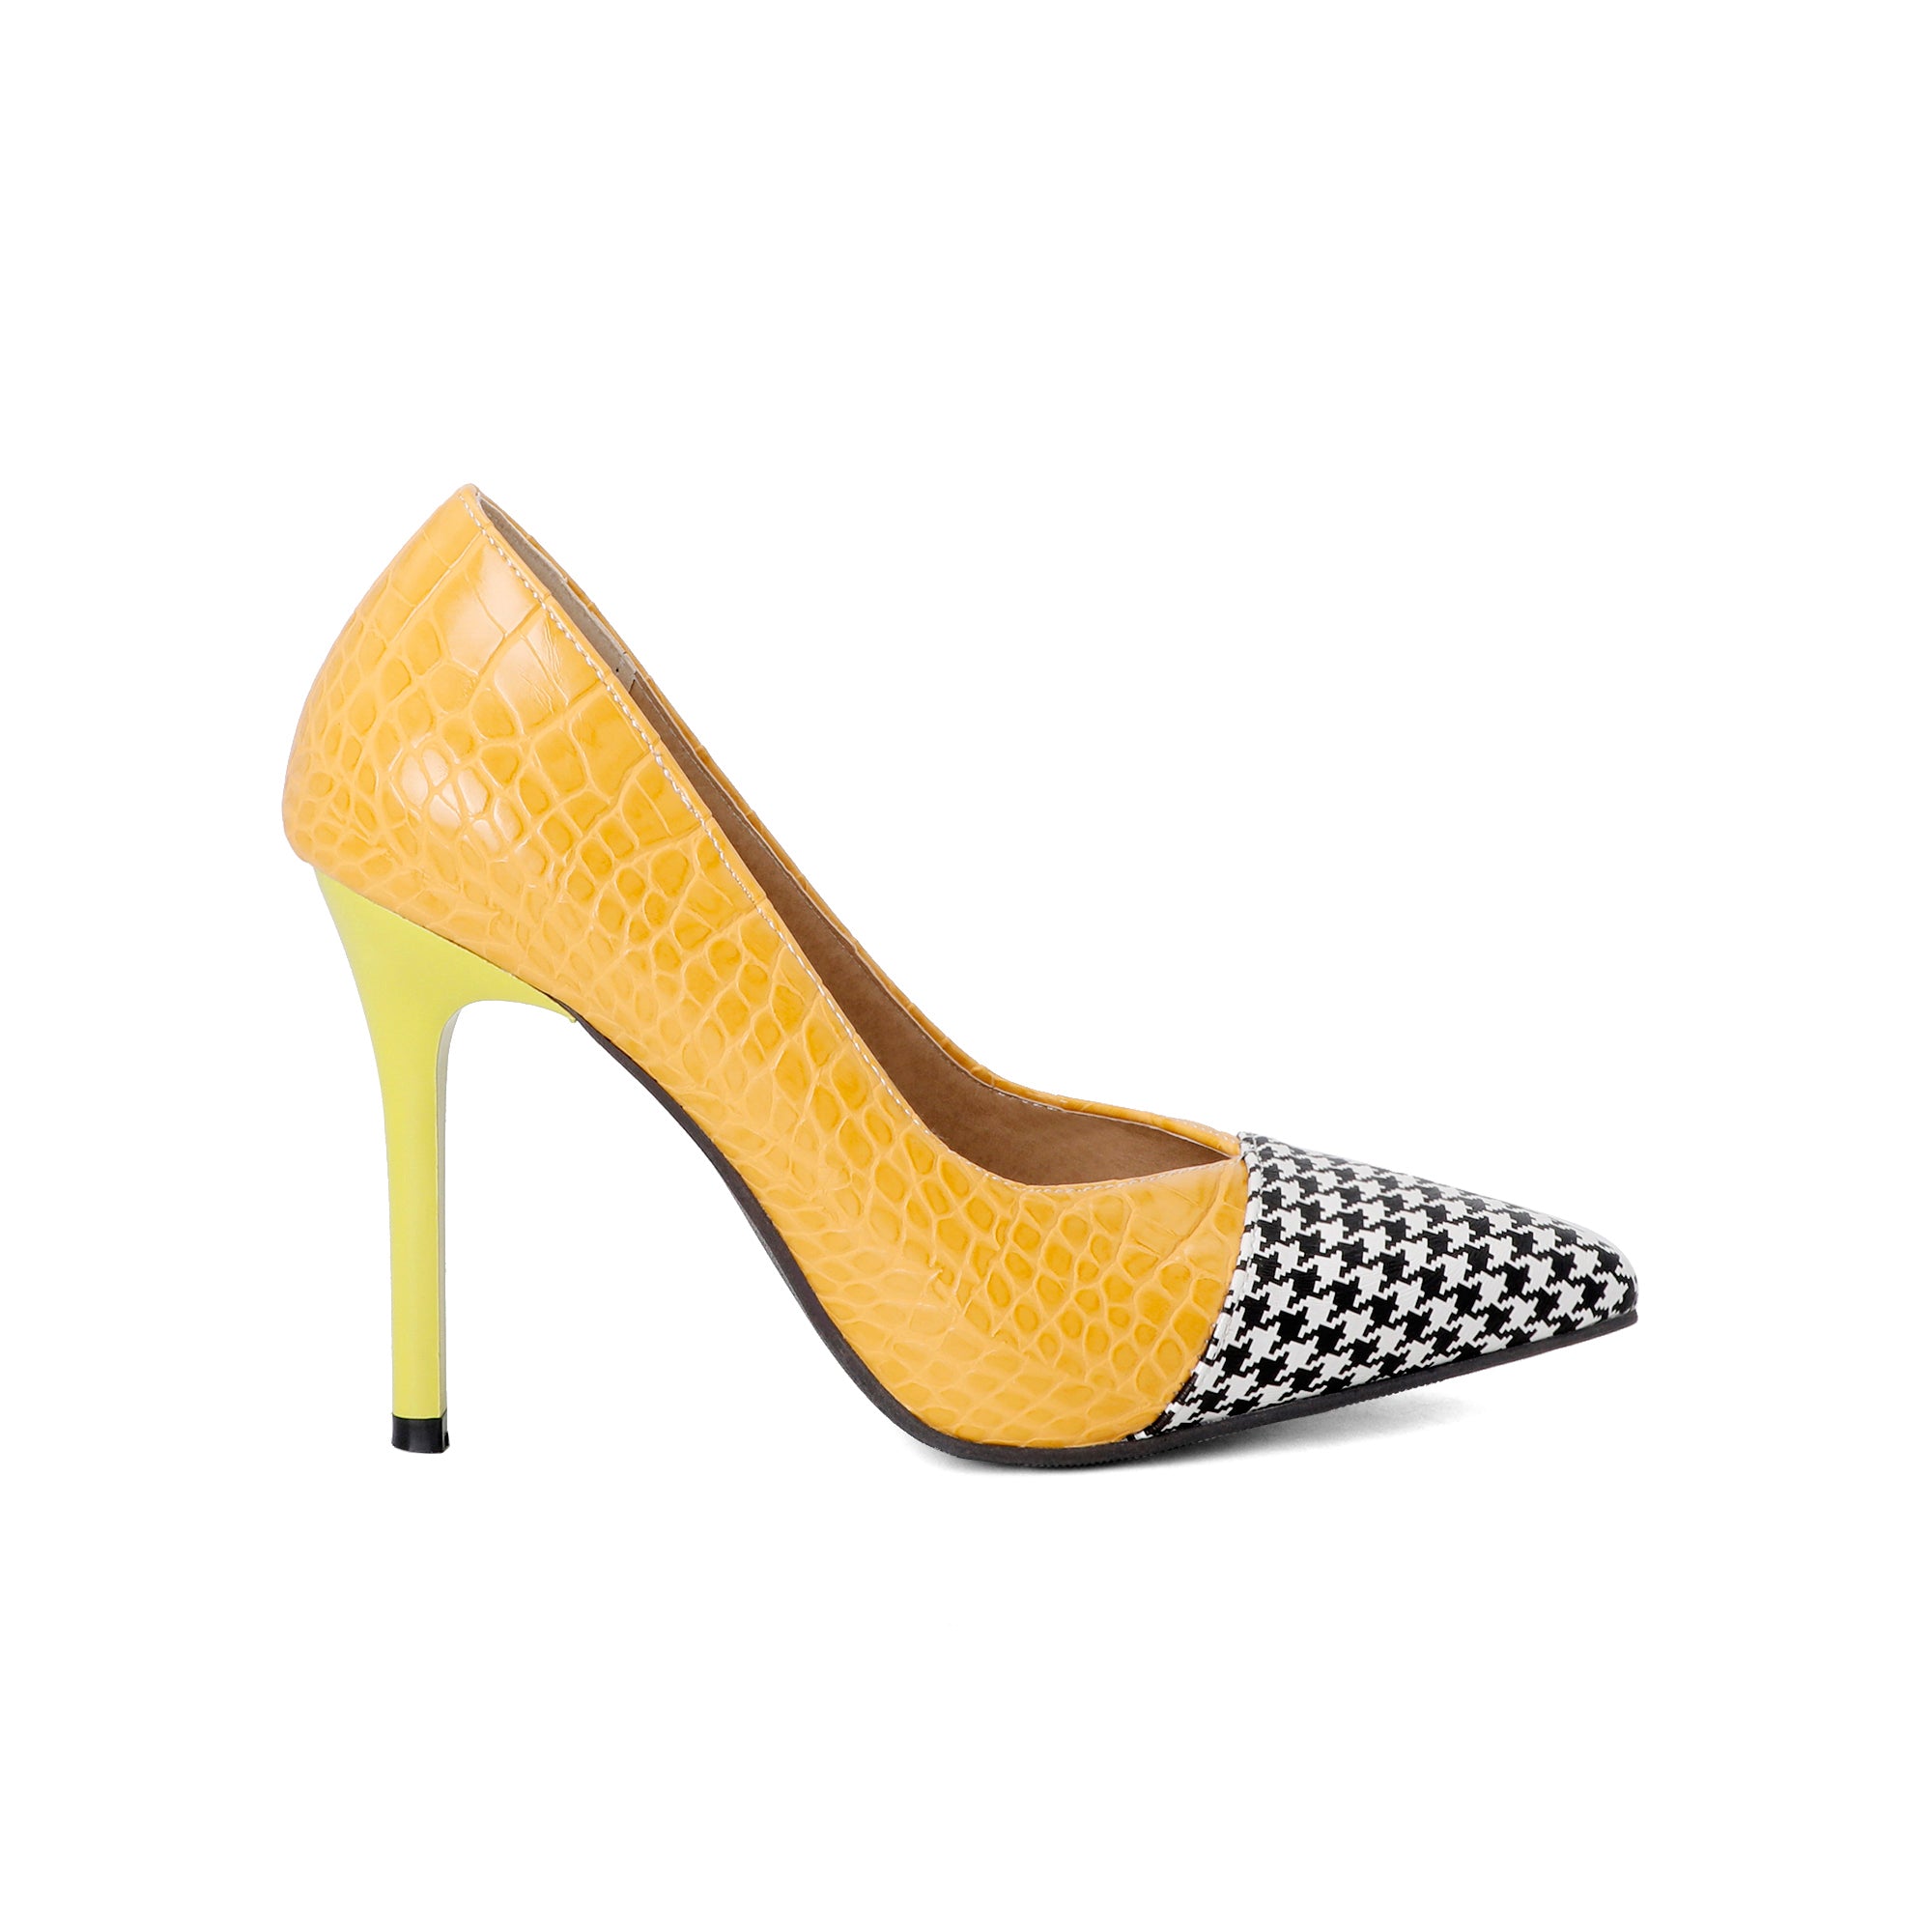 Bigsizeheels Houndstooth spliced pointy heels - yellow freeshipping - bigsizeheel®-size5-size15 -All Plus Sizes Available!